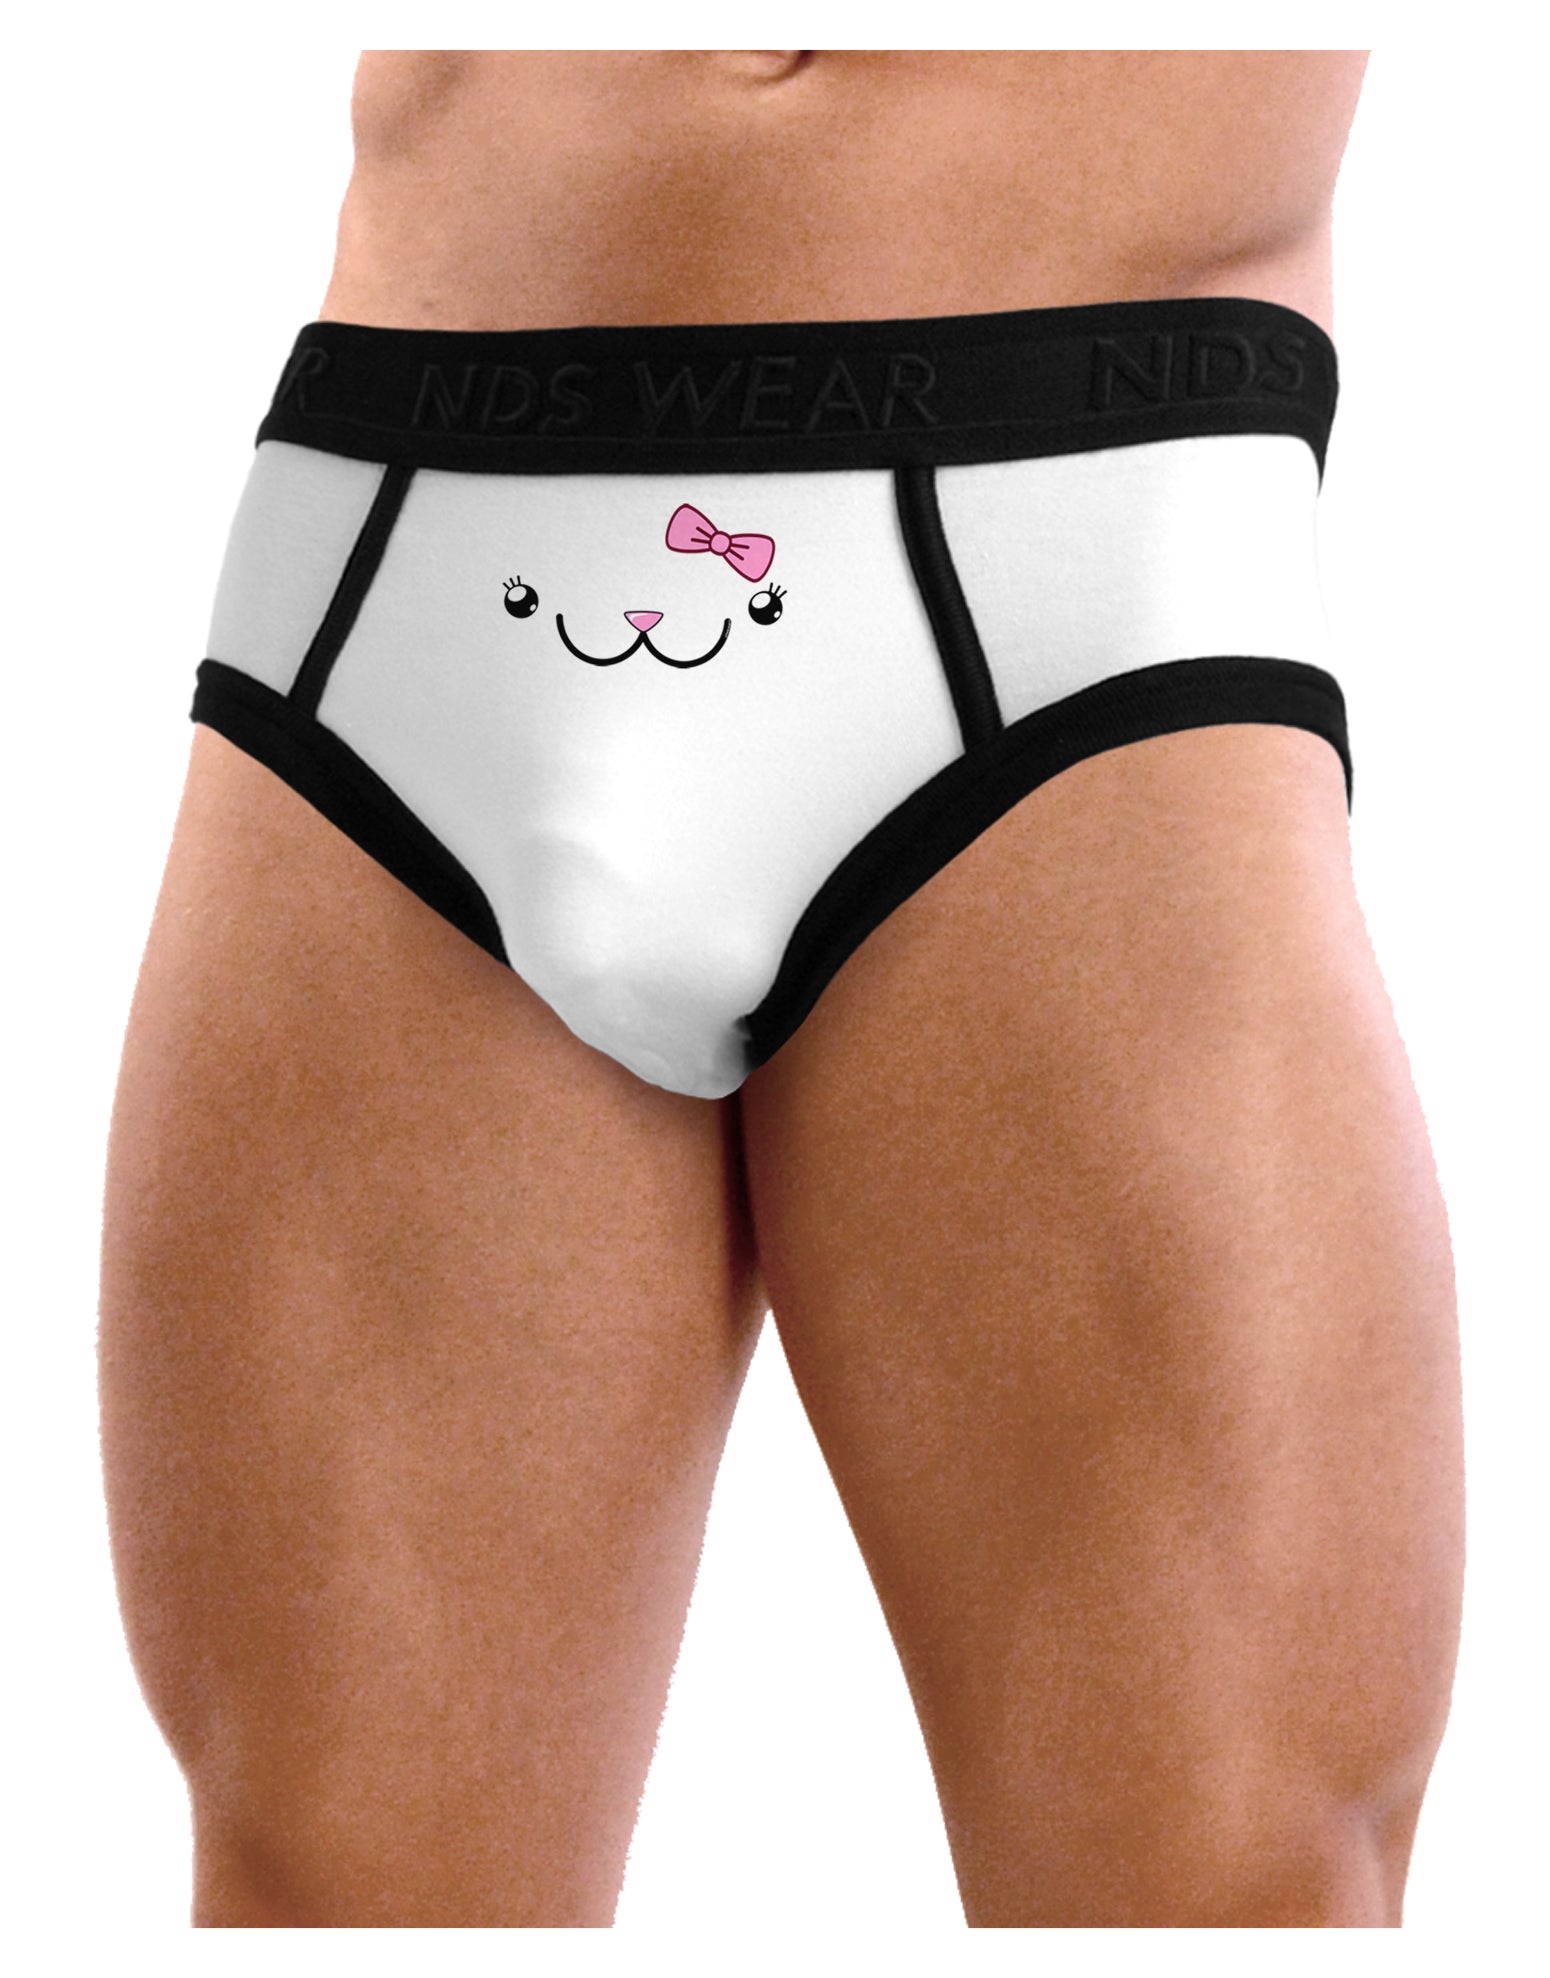 Kyu-T - Kawa Cute Mens NDS Wear Briefs Underwear Davson Sales